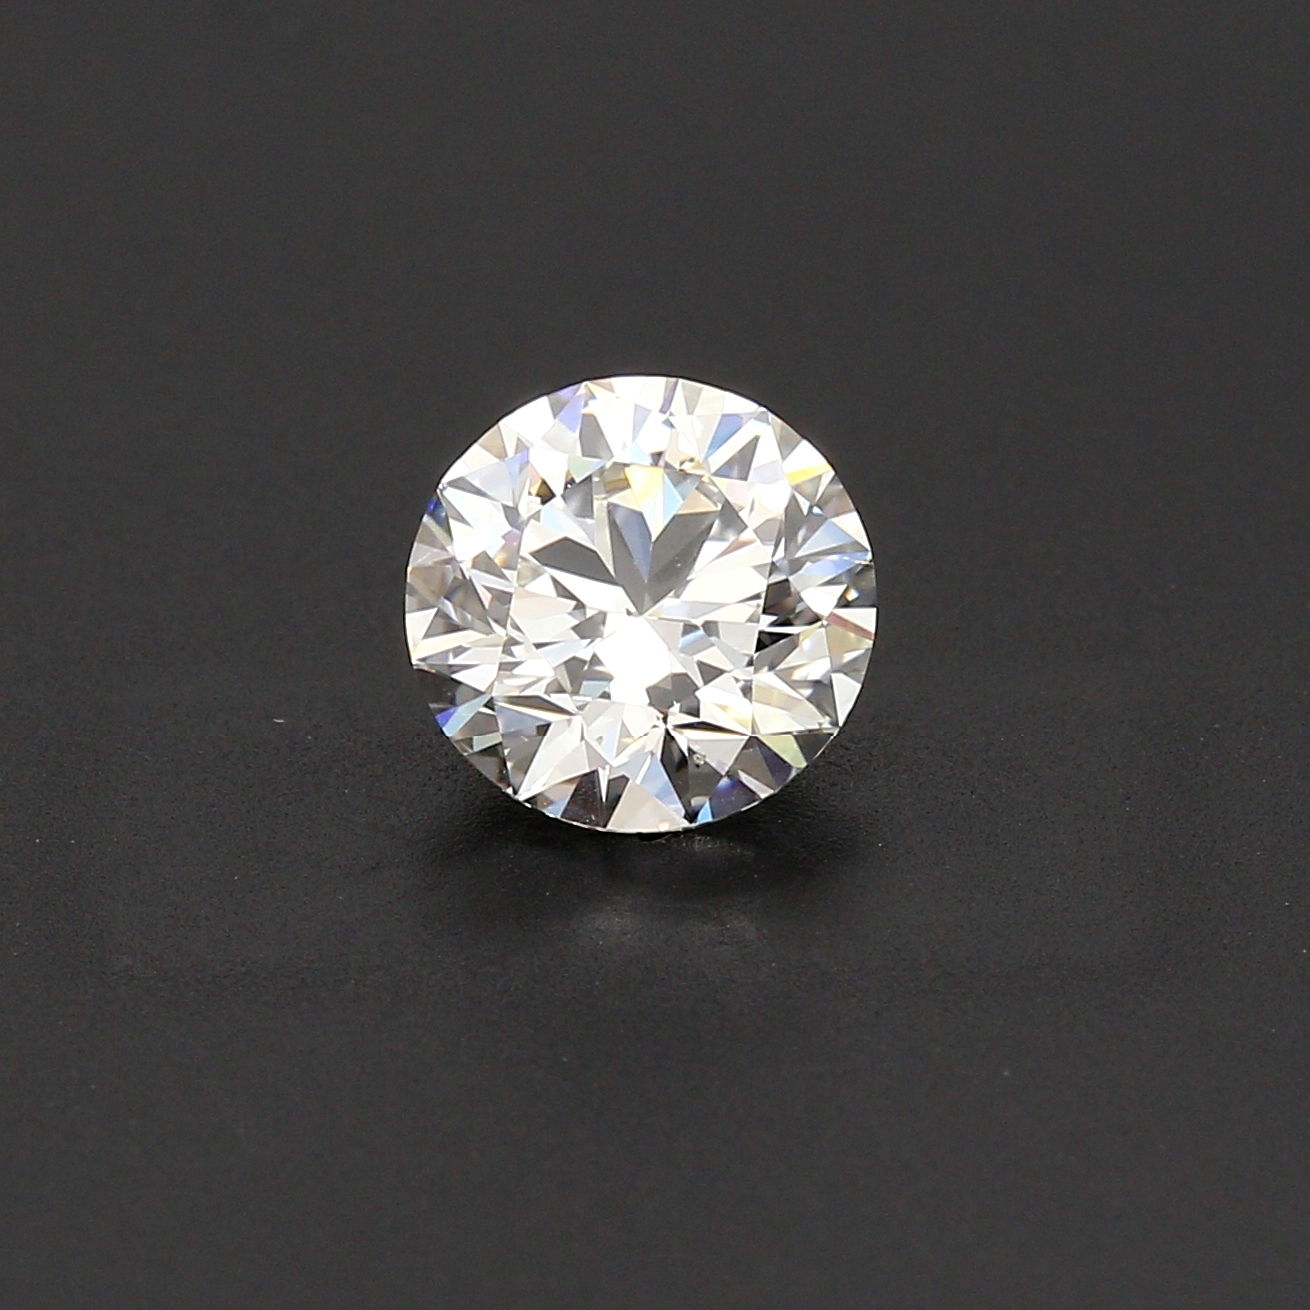 1.40ct Round Brilliant Cut Diamond, SI1-I -GIA/INSC